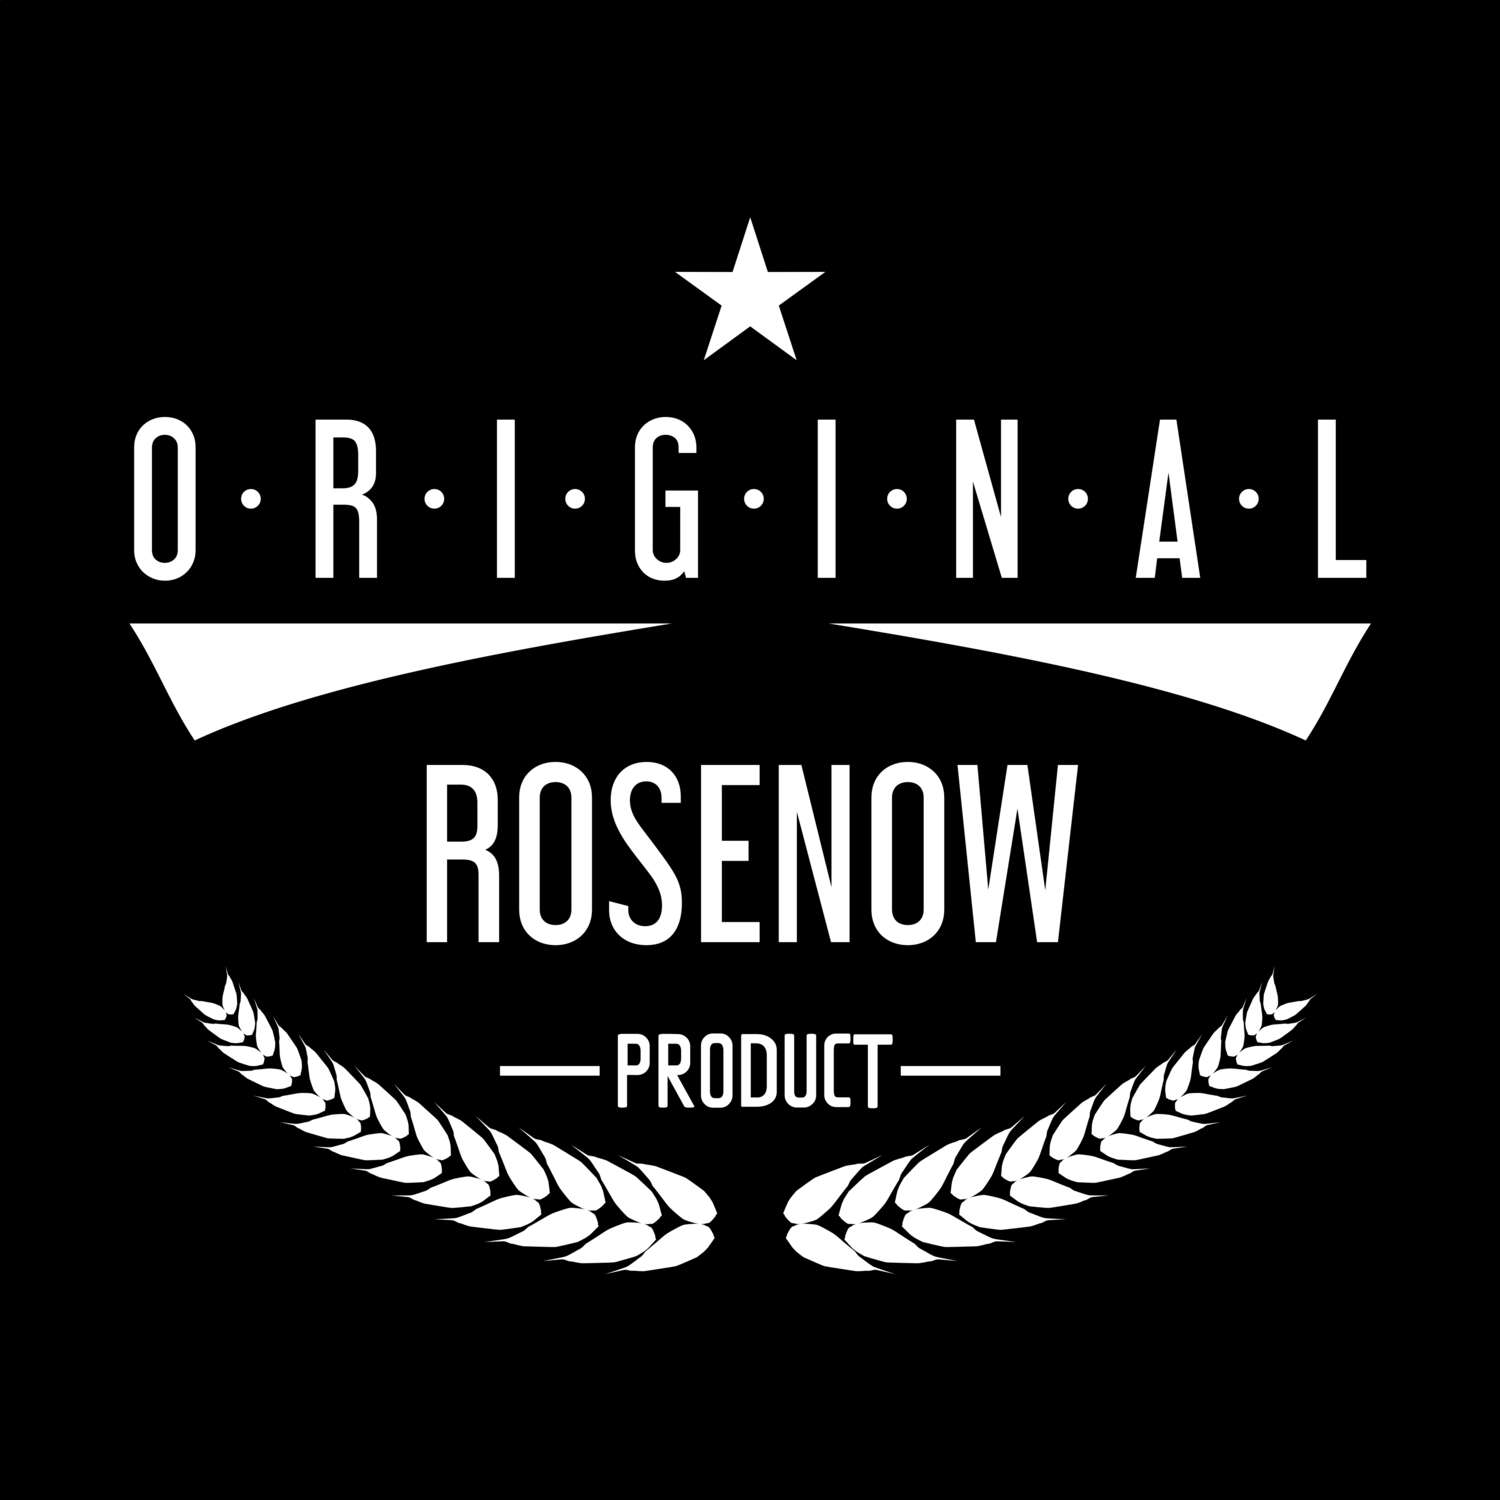 Rosenow T-Shirt »Original Product«